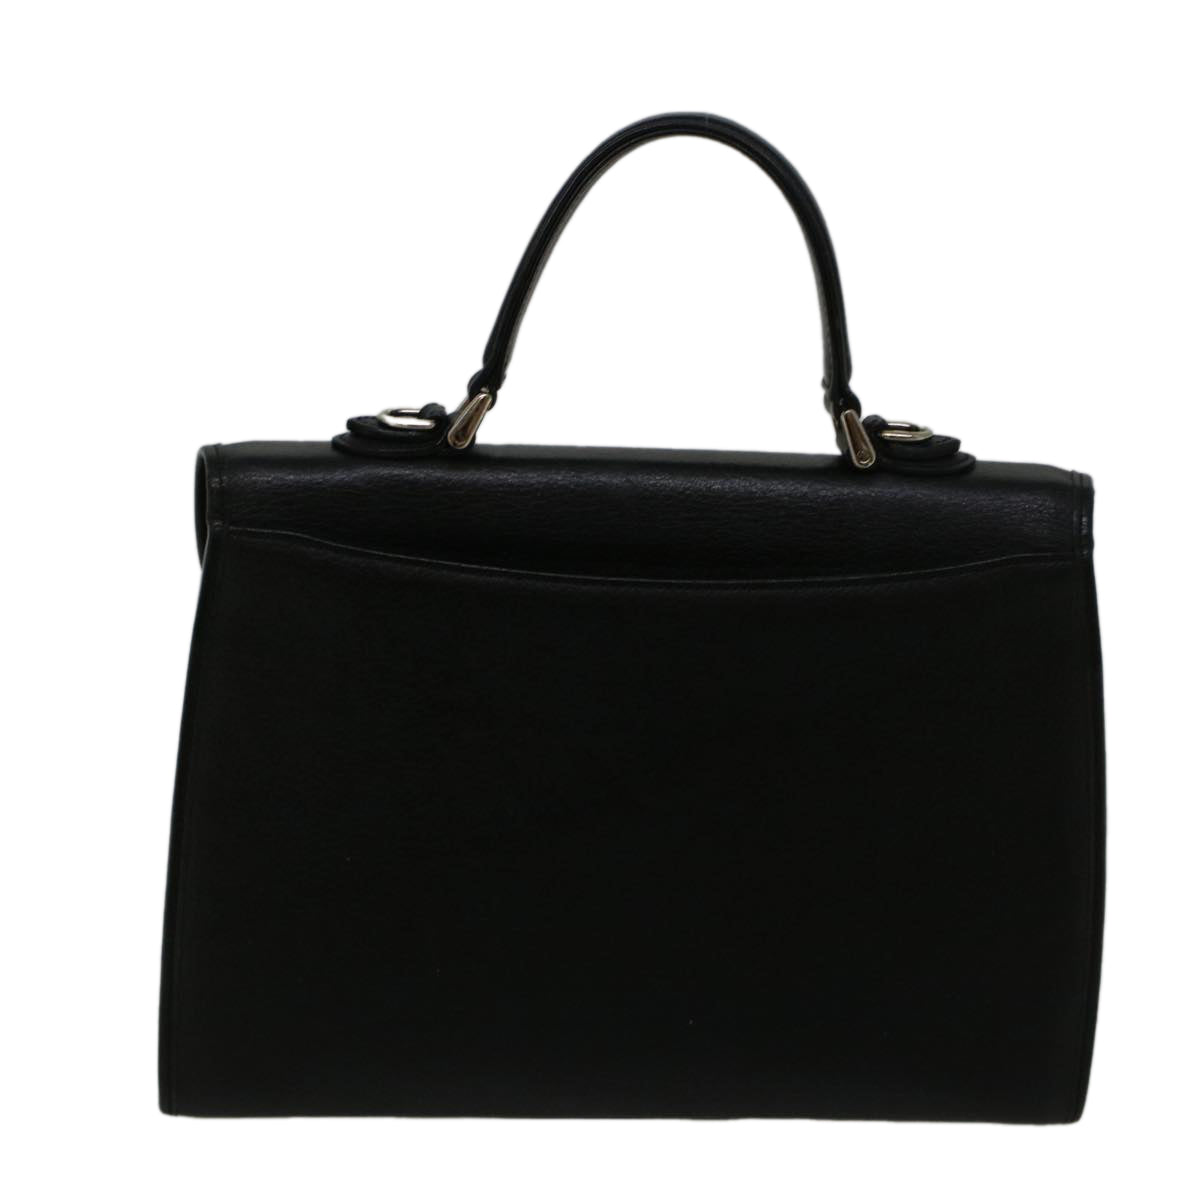 Burberrys Hand Bag Leather Black Auth am5156